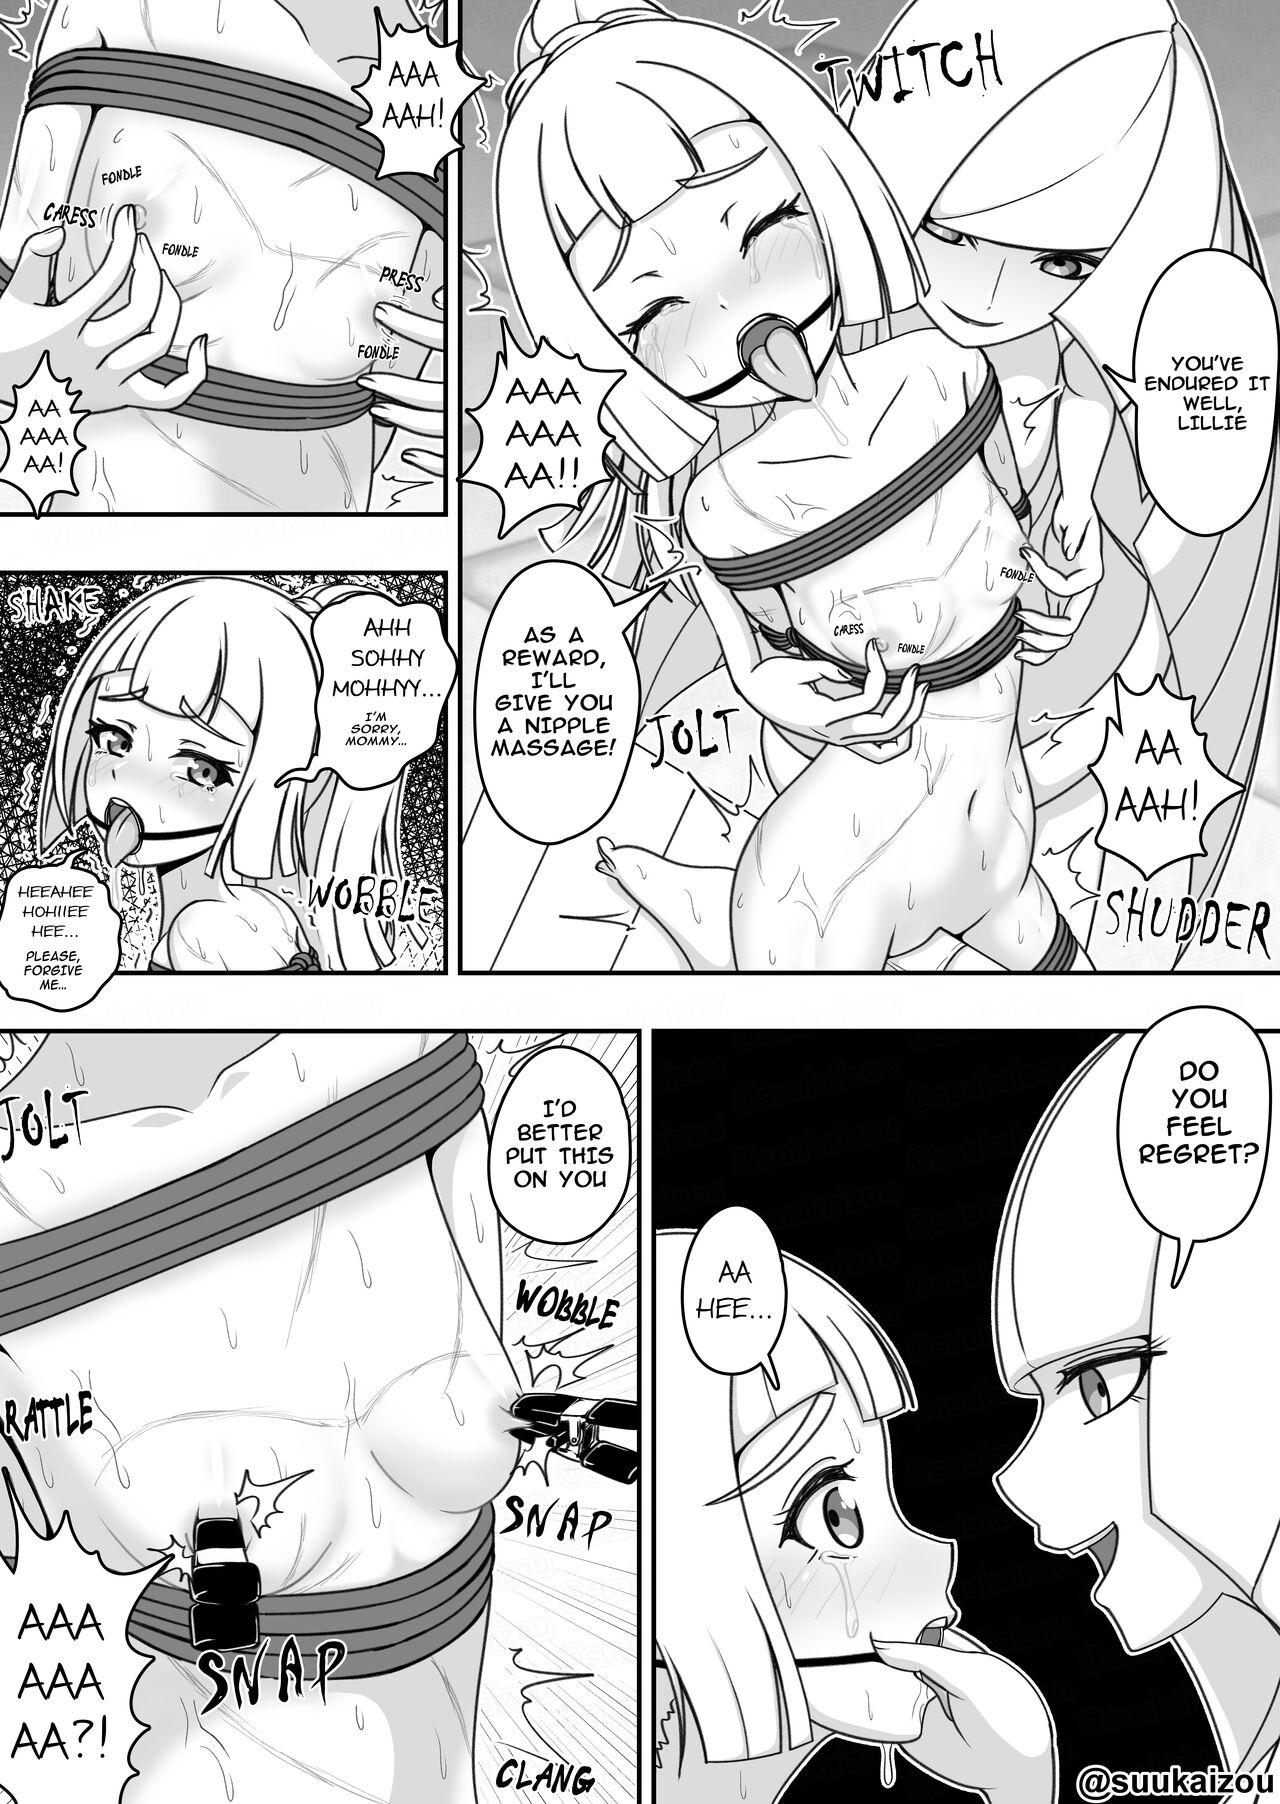 Analsex Lillie gets spanked by Lusamine. - Pokemon | pocket monsters Bukkake - Page 6